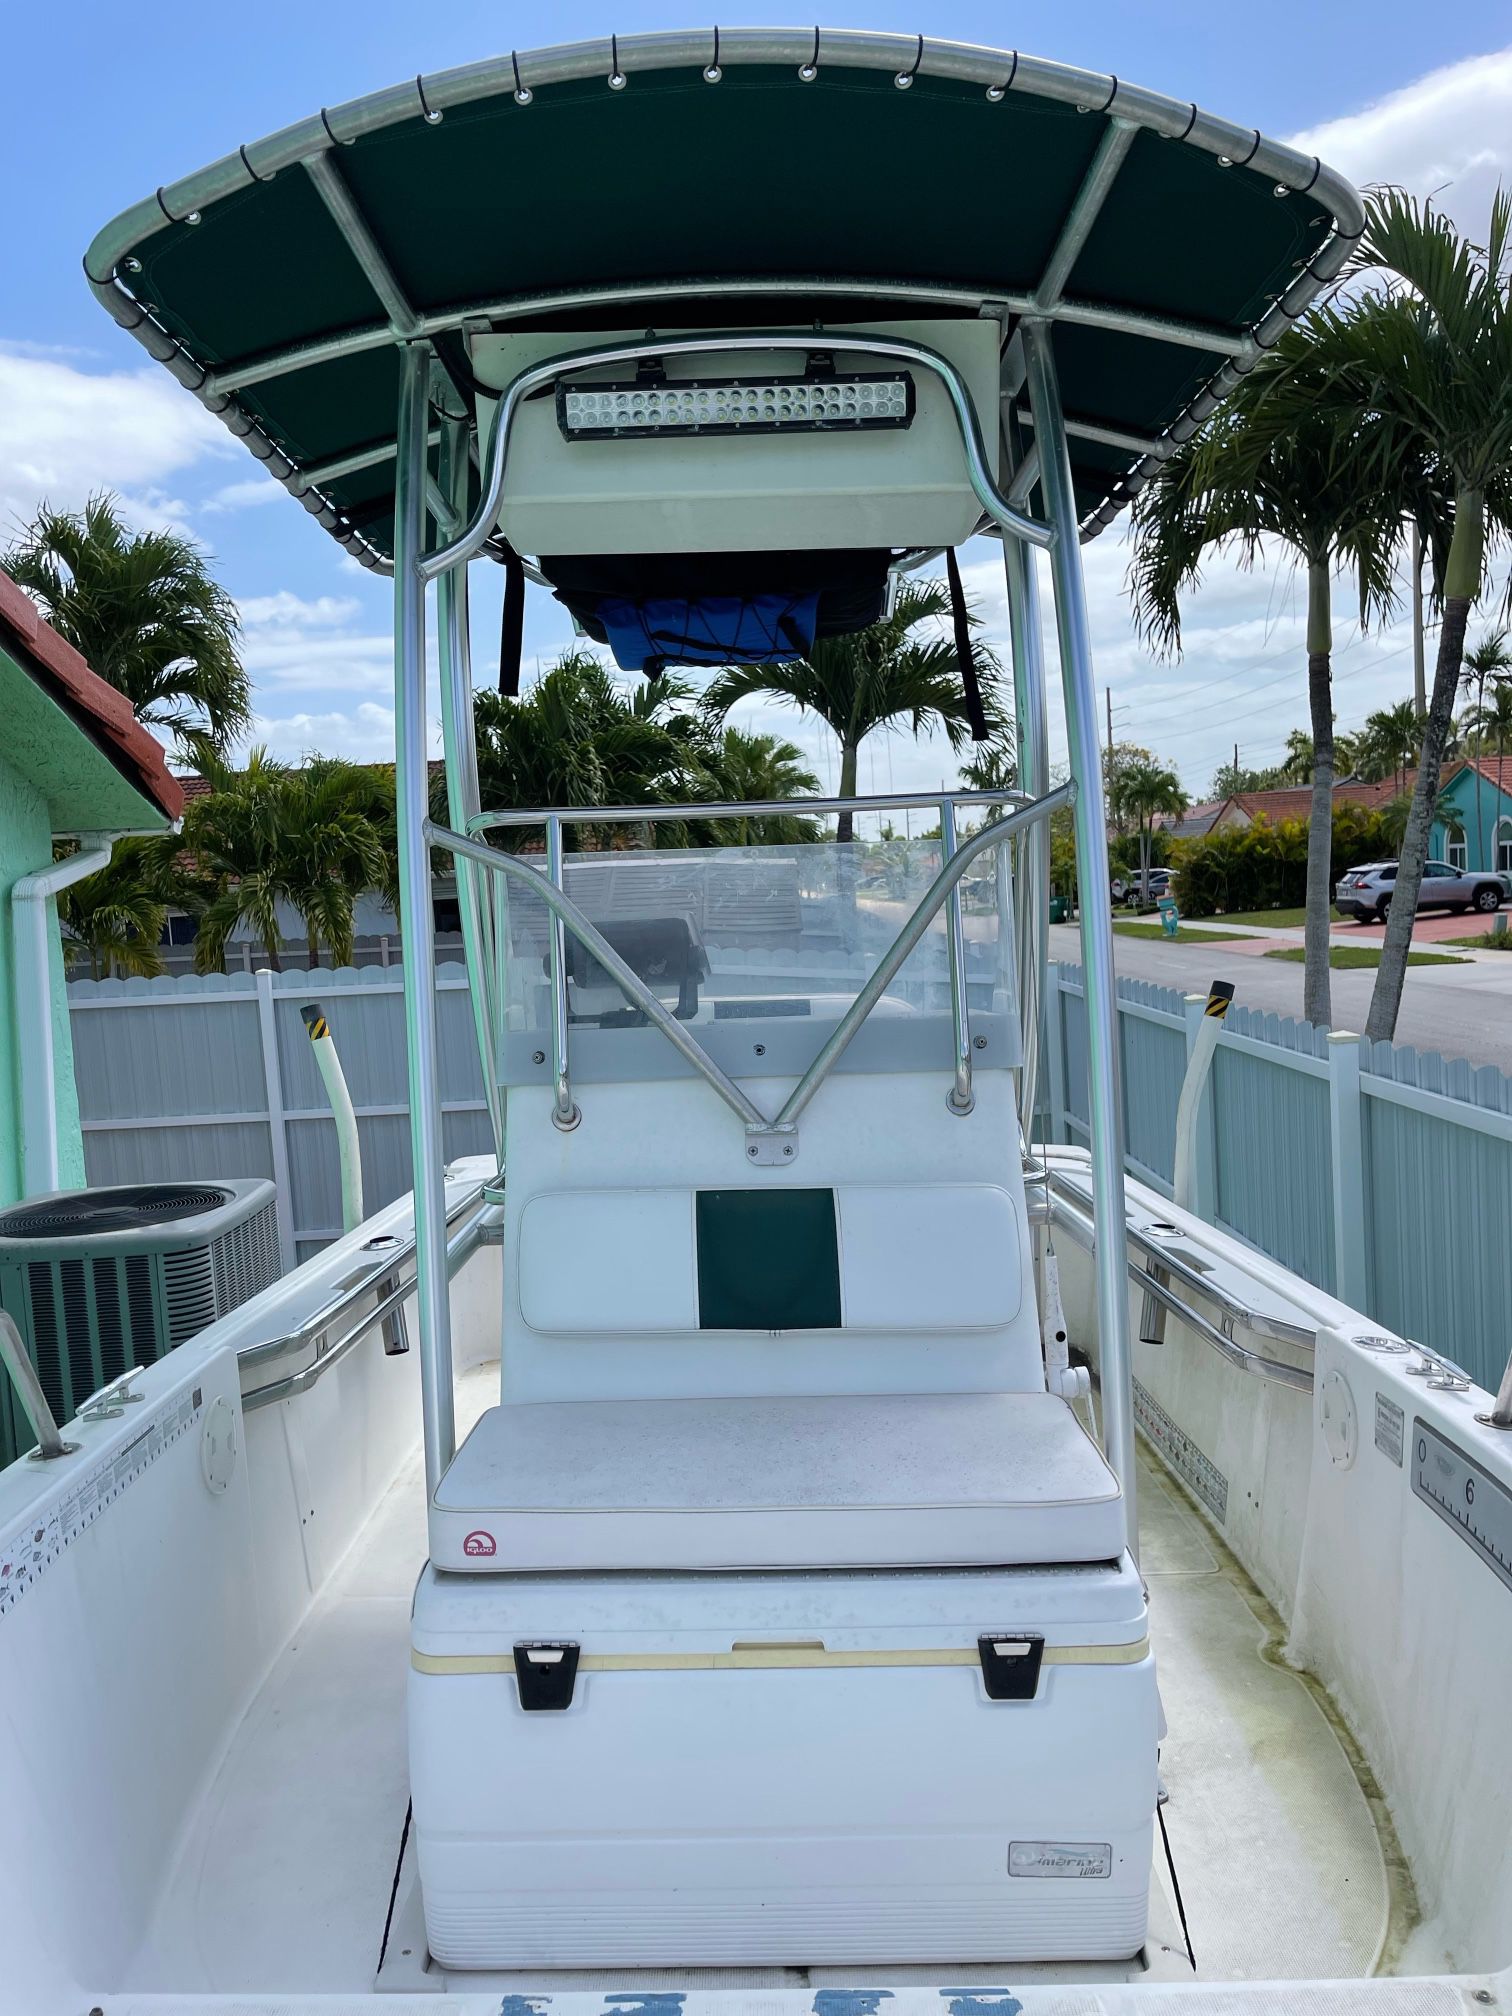 Marlin 170 Edgewater 17 for Sale in Miami, FL - OfferUp